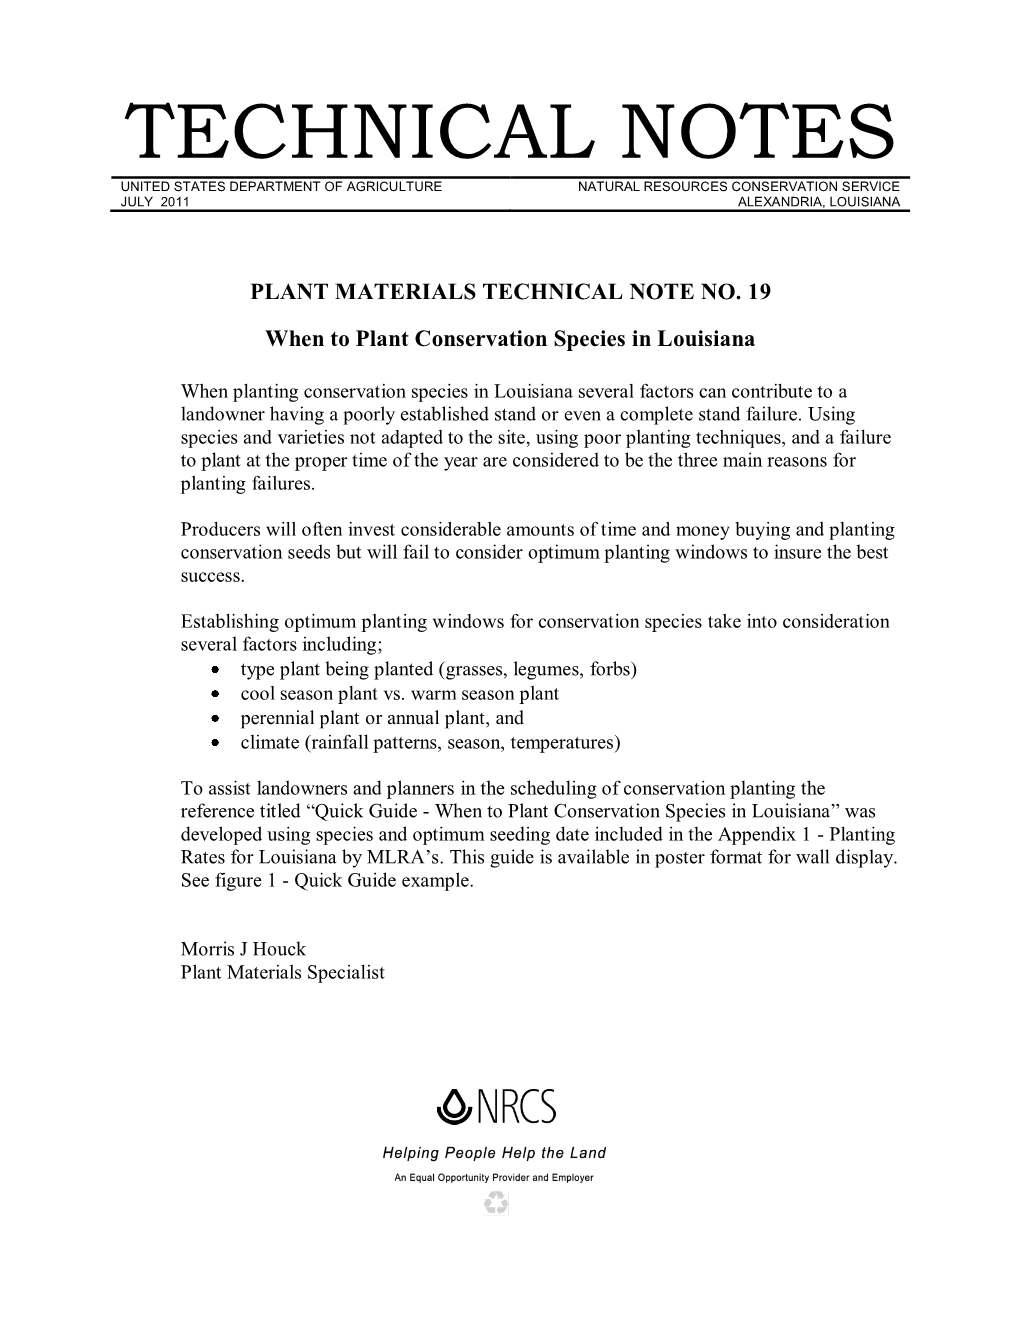 LAPMC Plant Materials Technical Note 19